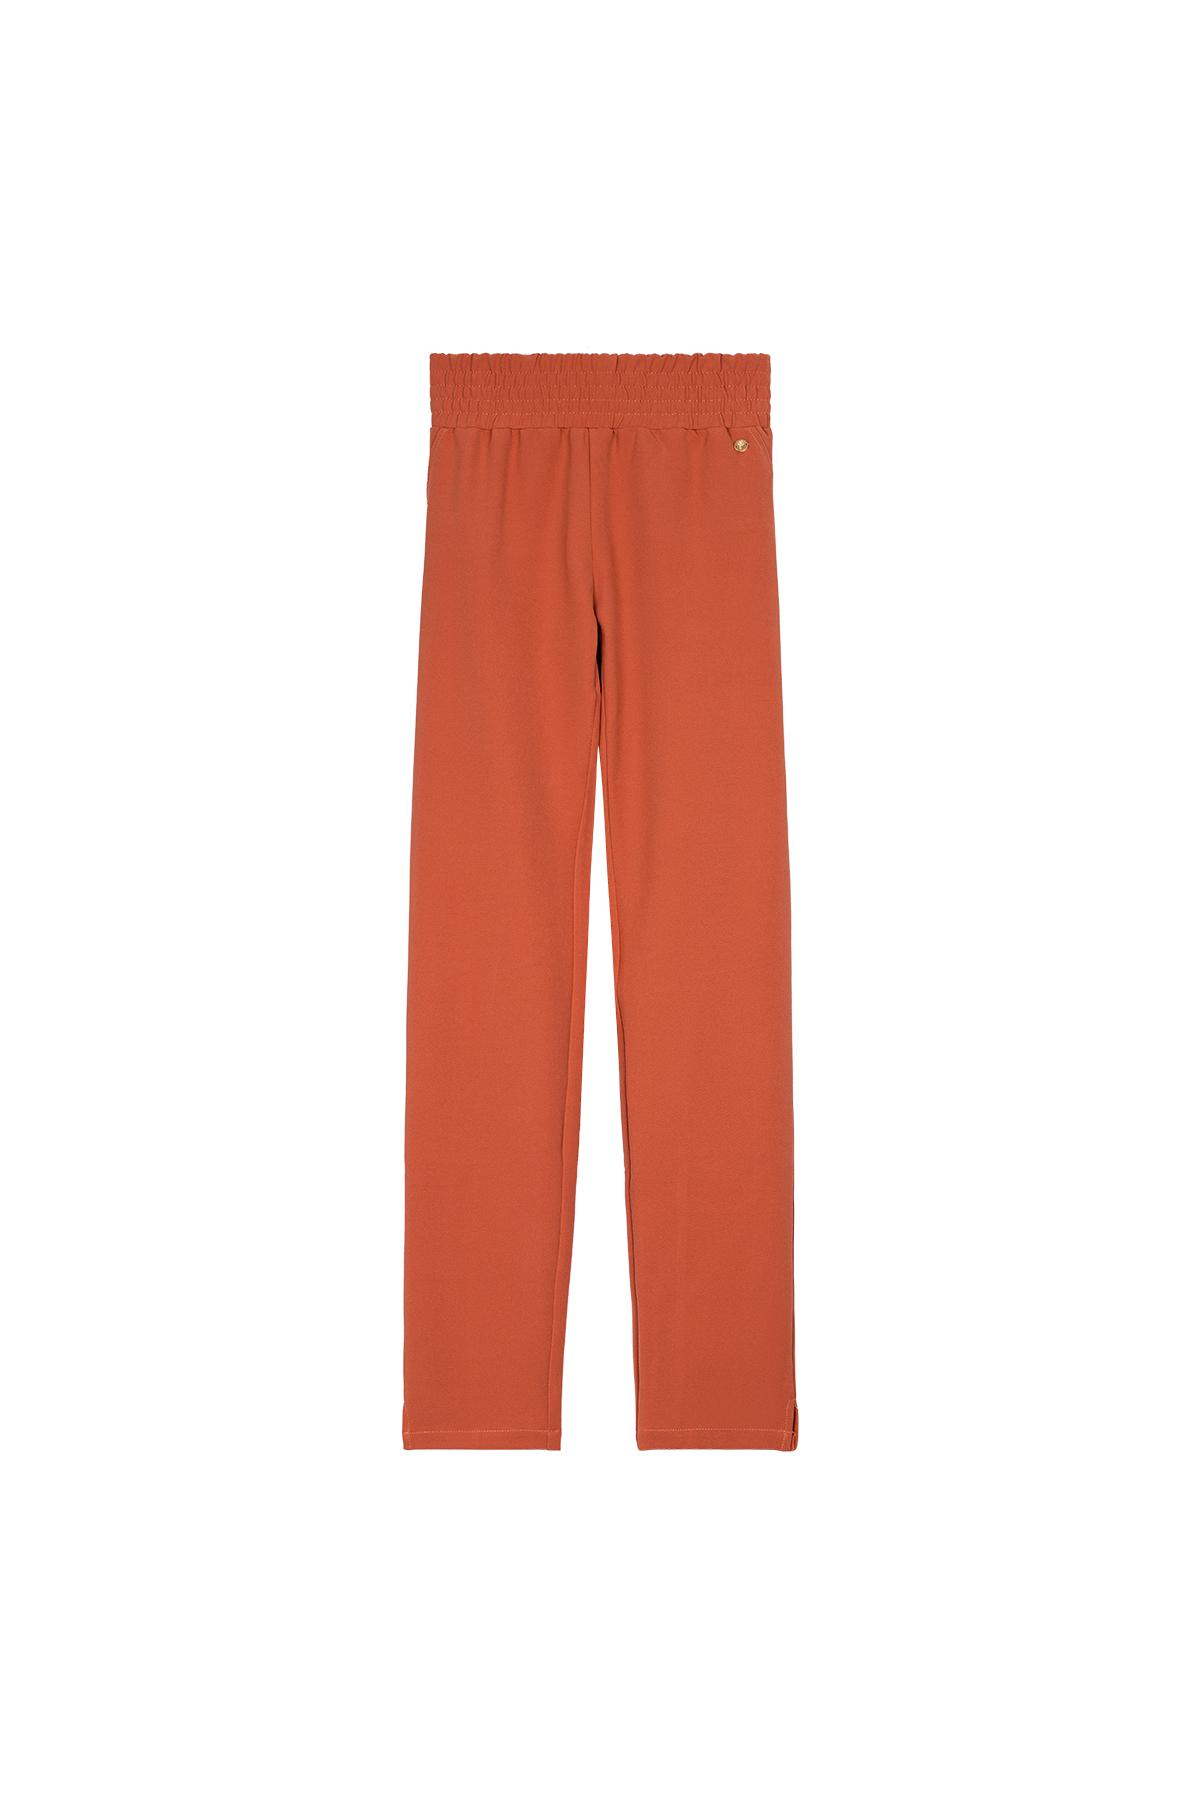 Pantalon coupe slim Orange M